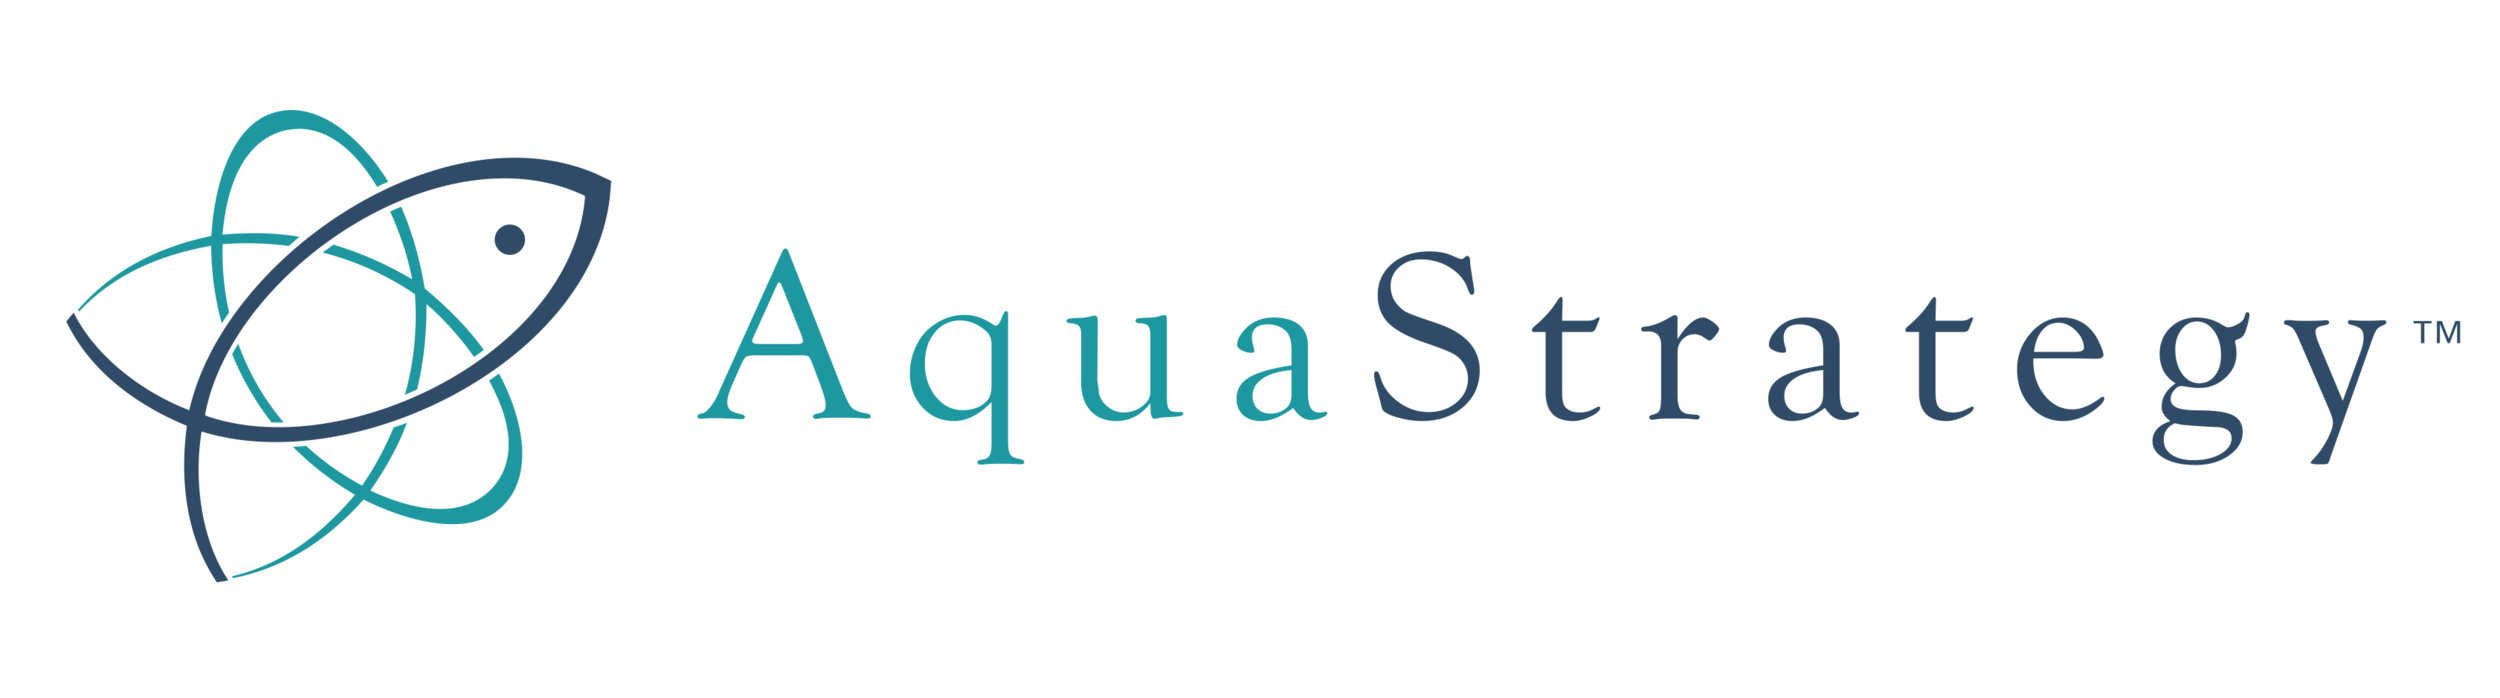 aqua_strategy_banner_logo.png